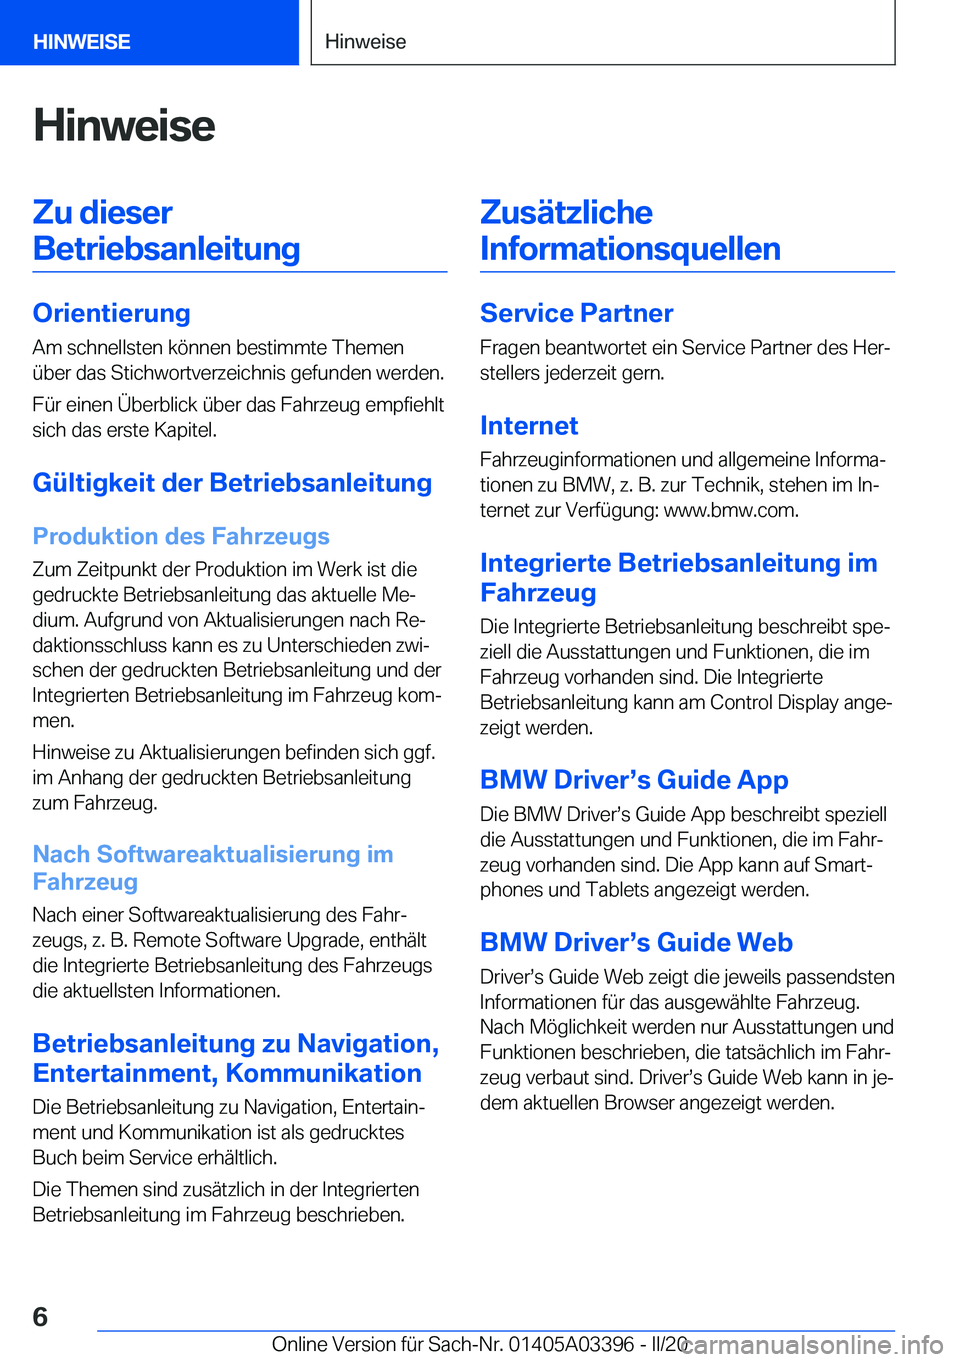 BMW M8 GRAN COUPE 2020  Betriebsanleitungen (in German) �H�i�n�w�e�i�s�e�Z�u��d�i�e�s�e�r�B�e�t�r�i�e�b�s�a�n�l�e�i�t�u�n�g
�O�r�i�e�n�t�i�e�r�u�n�g �A�m��s�c�h�n�e�l�l�s�t�e�n��k�